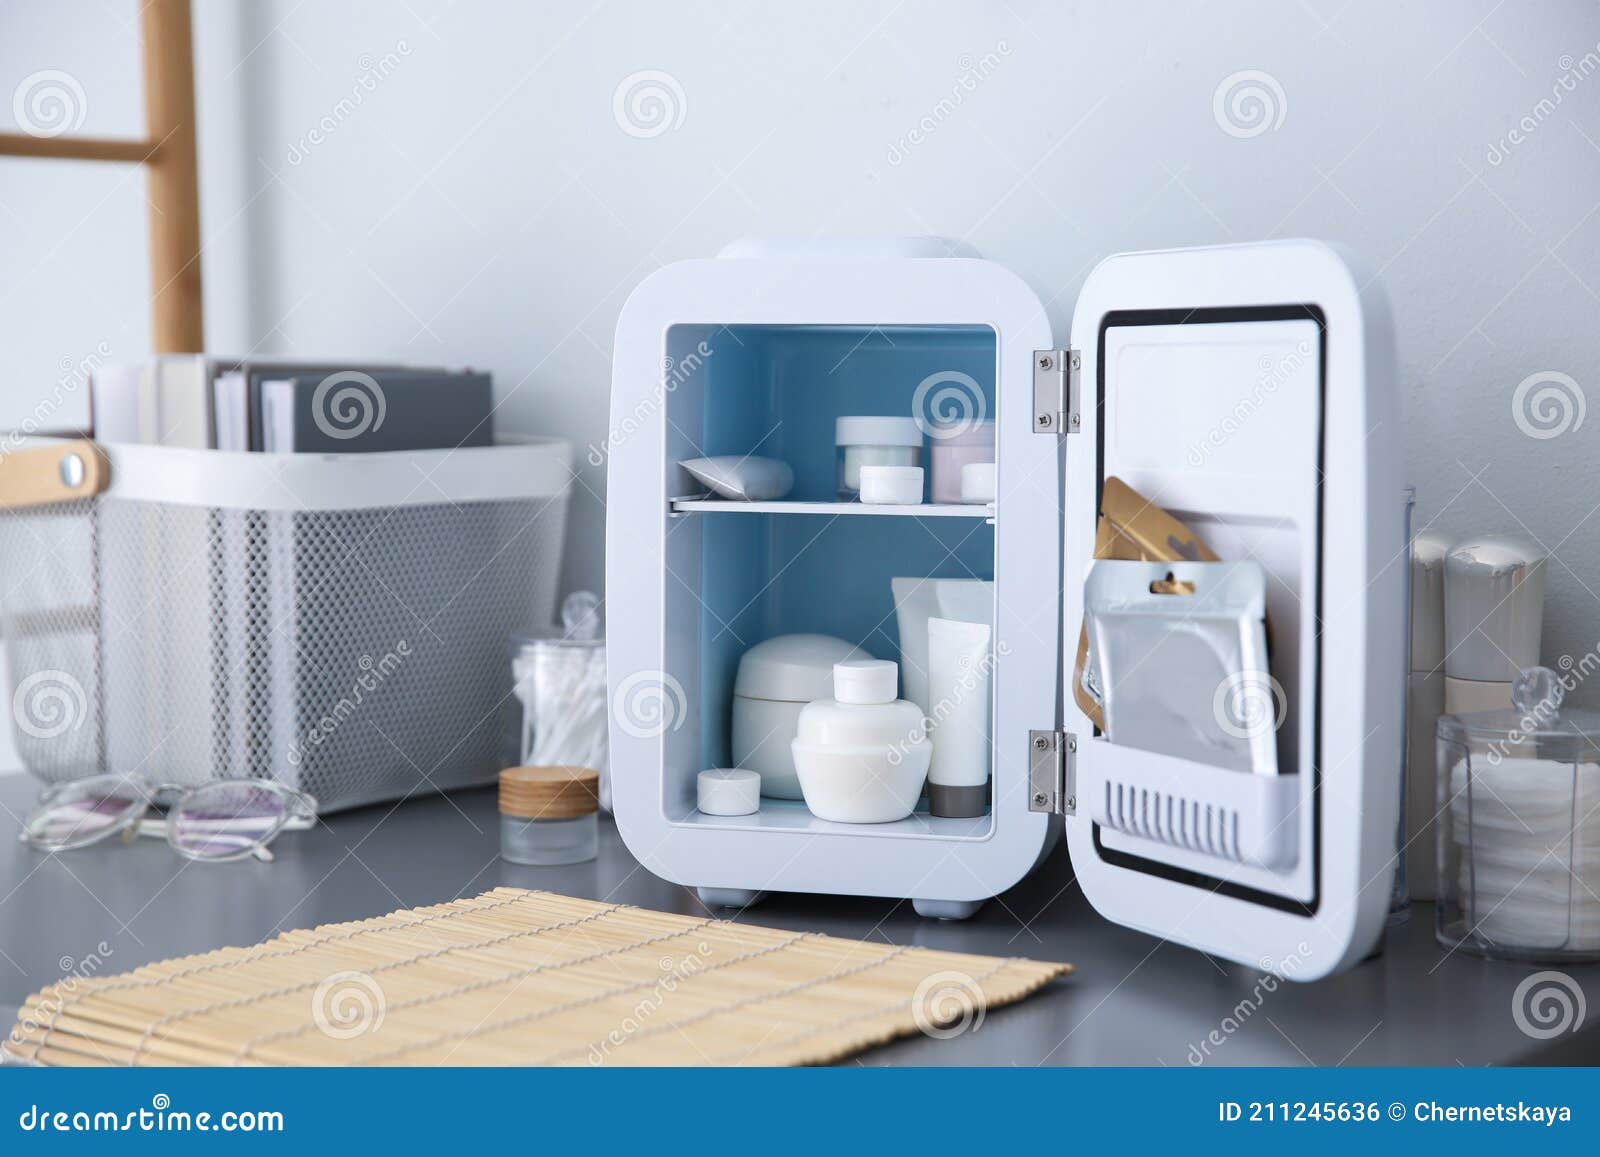 https://thumbs.dreamstime.com/z/mini-fridge-cosmetic-products-grey-vanity-table-indoors-mini-fridge-cosmetic-products-grey-vanity-table-211245636.jpg